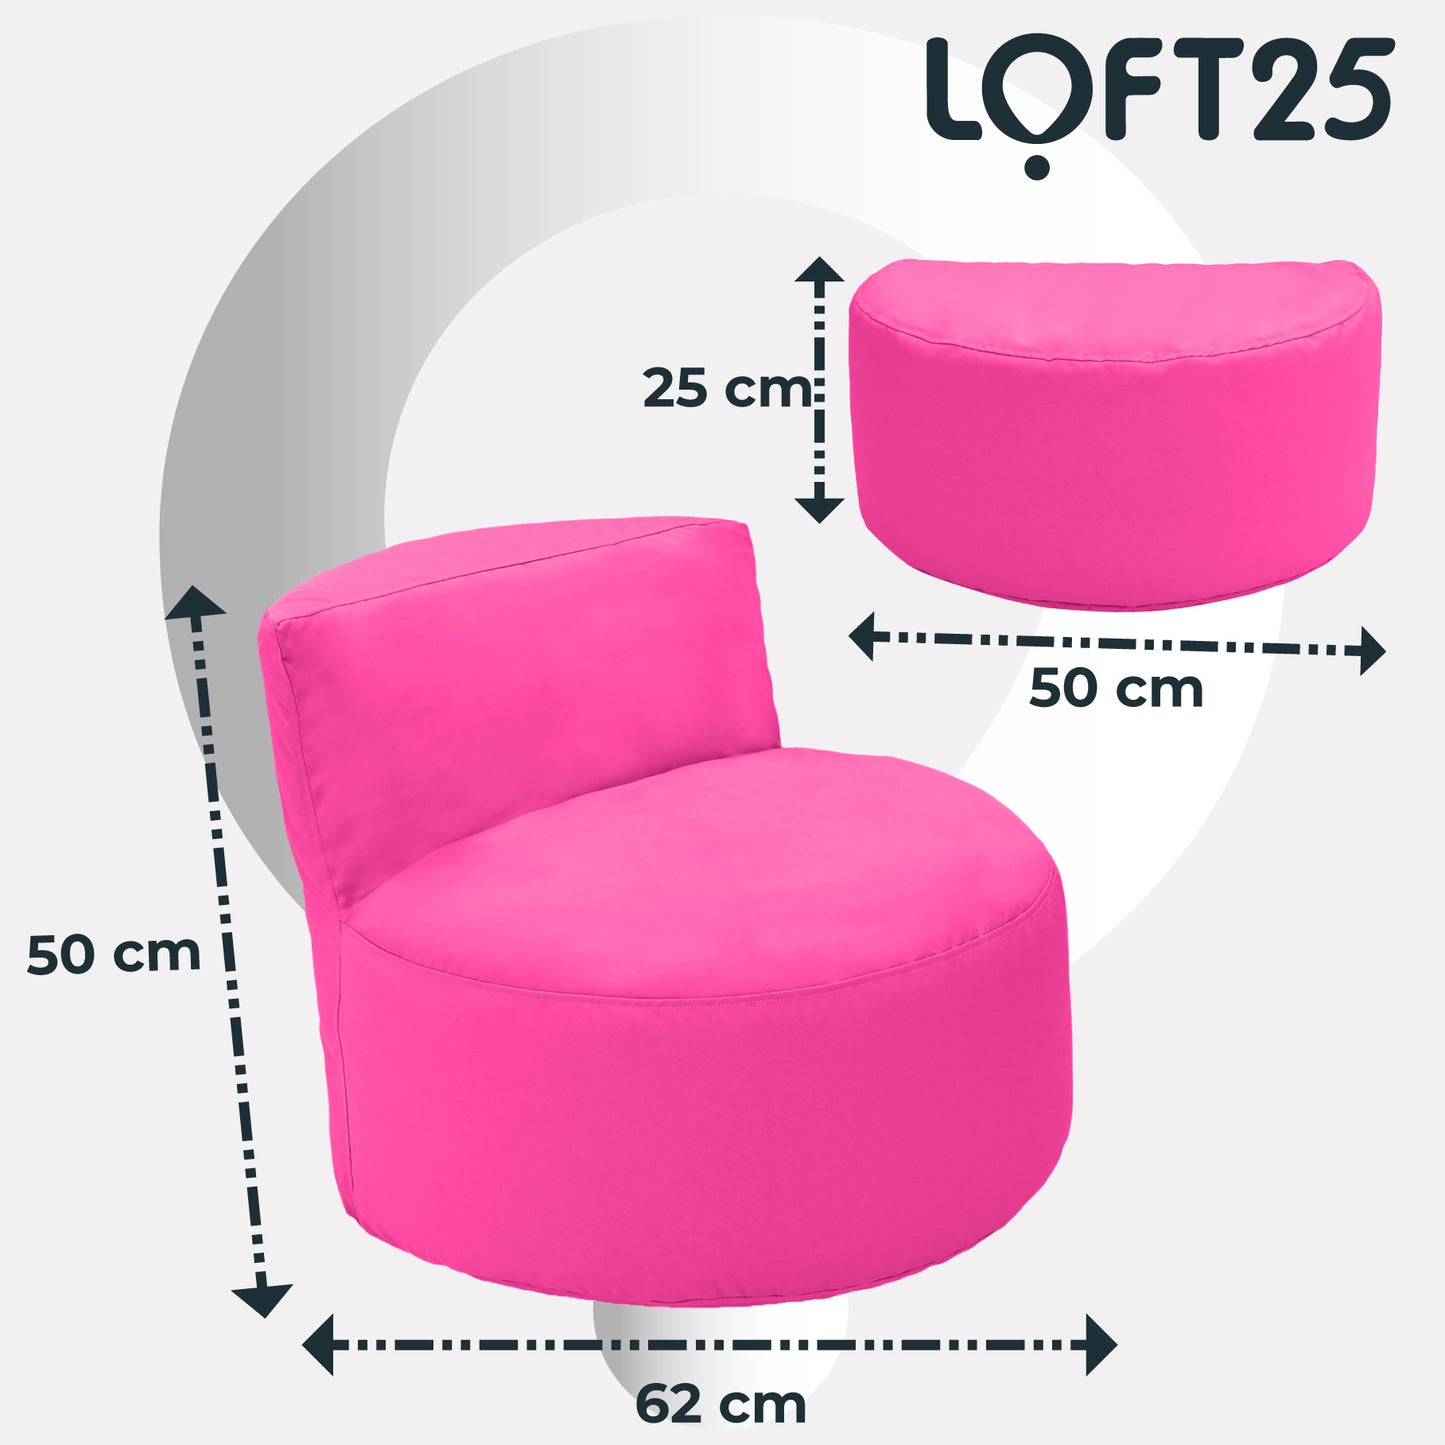 Loft 25 Kids Bean Bag Chair With Footstool